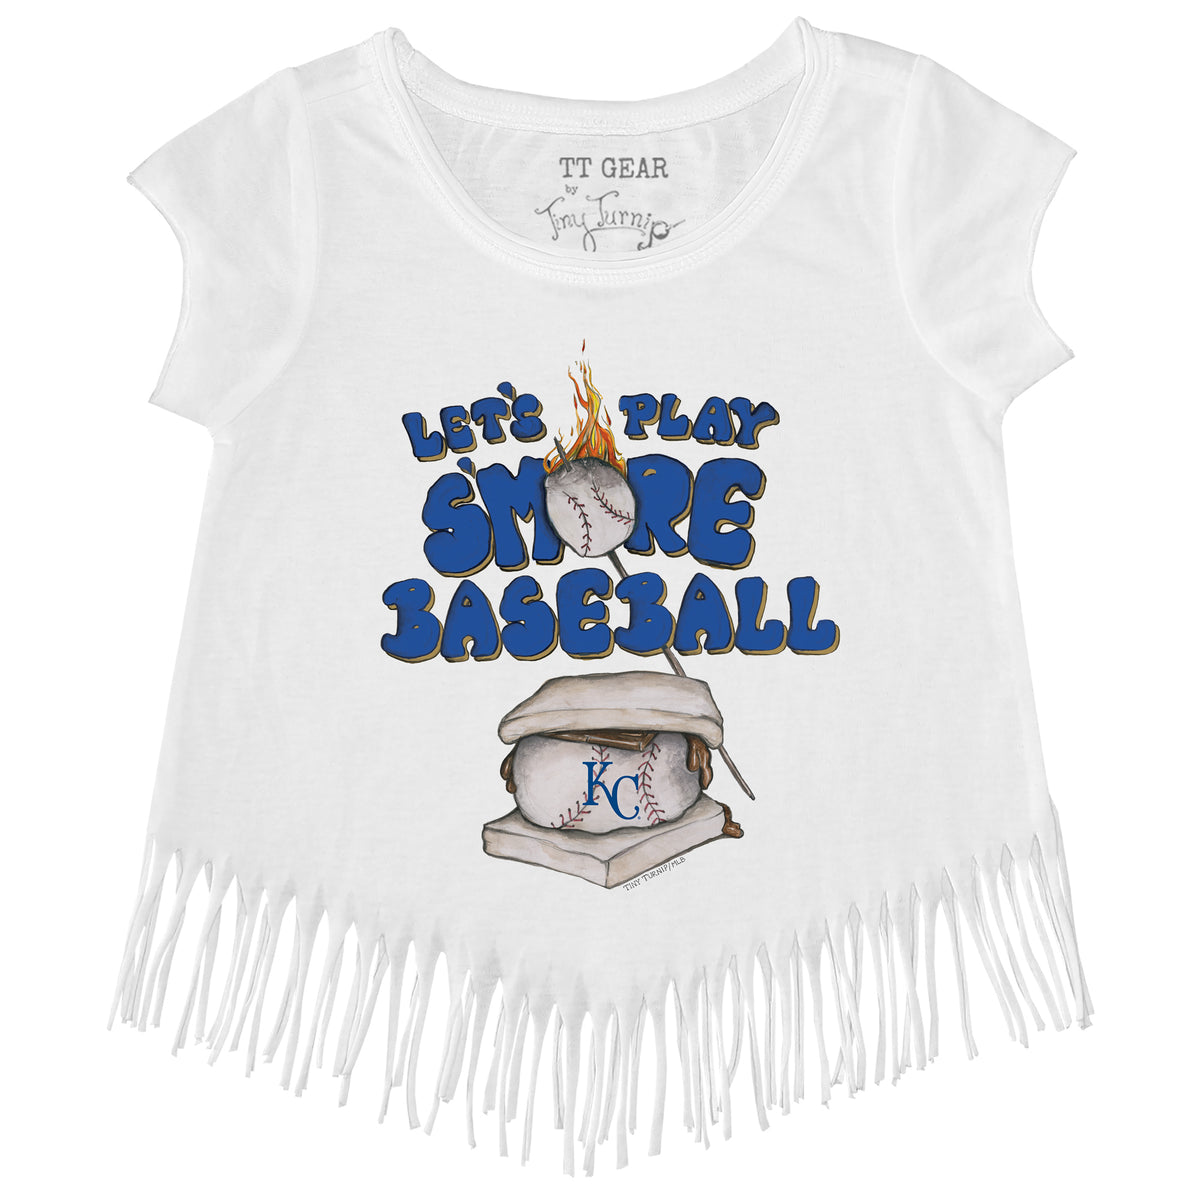 Tiny Turnip Kansas City Royals Spring Training 2023 Tee Shirt Women's Large / White